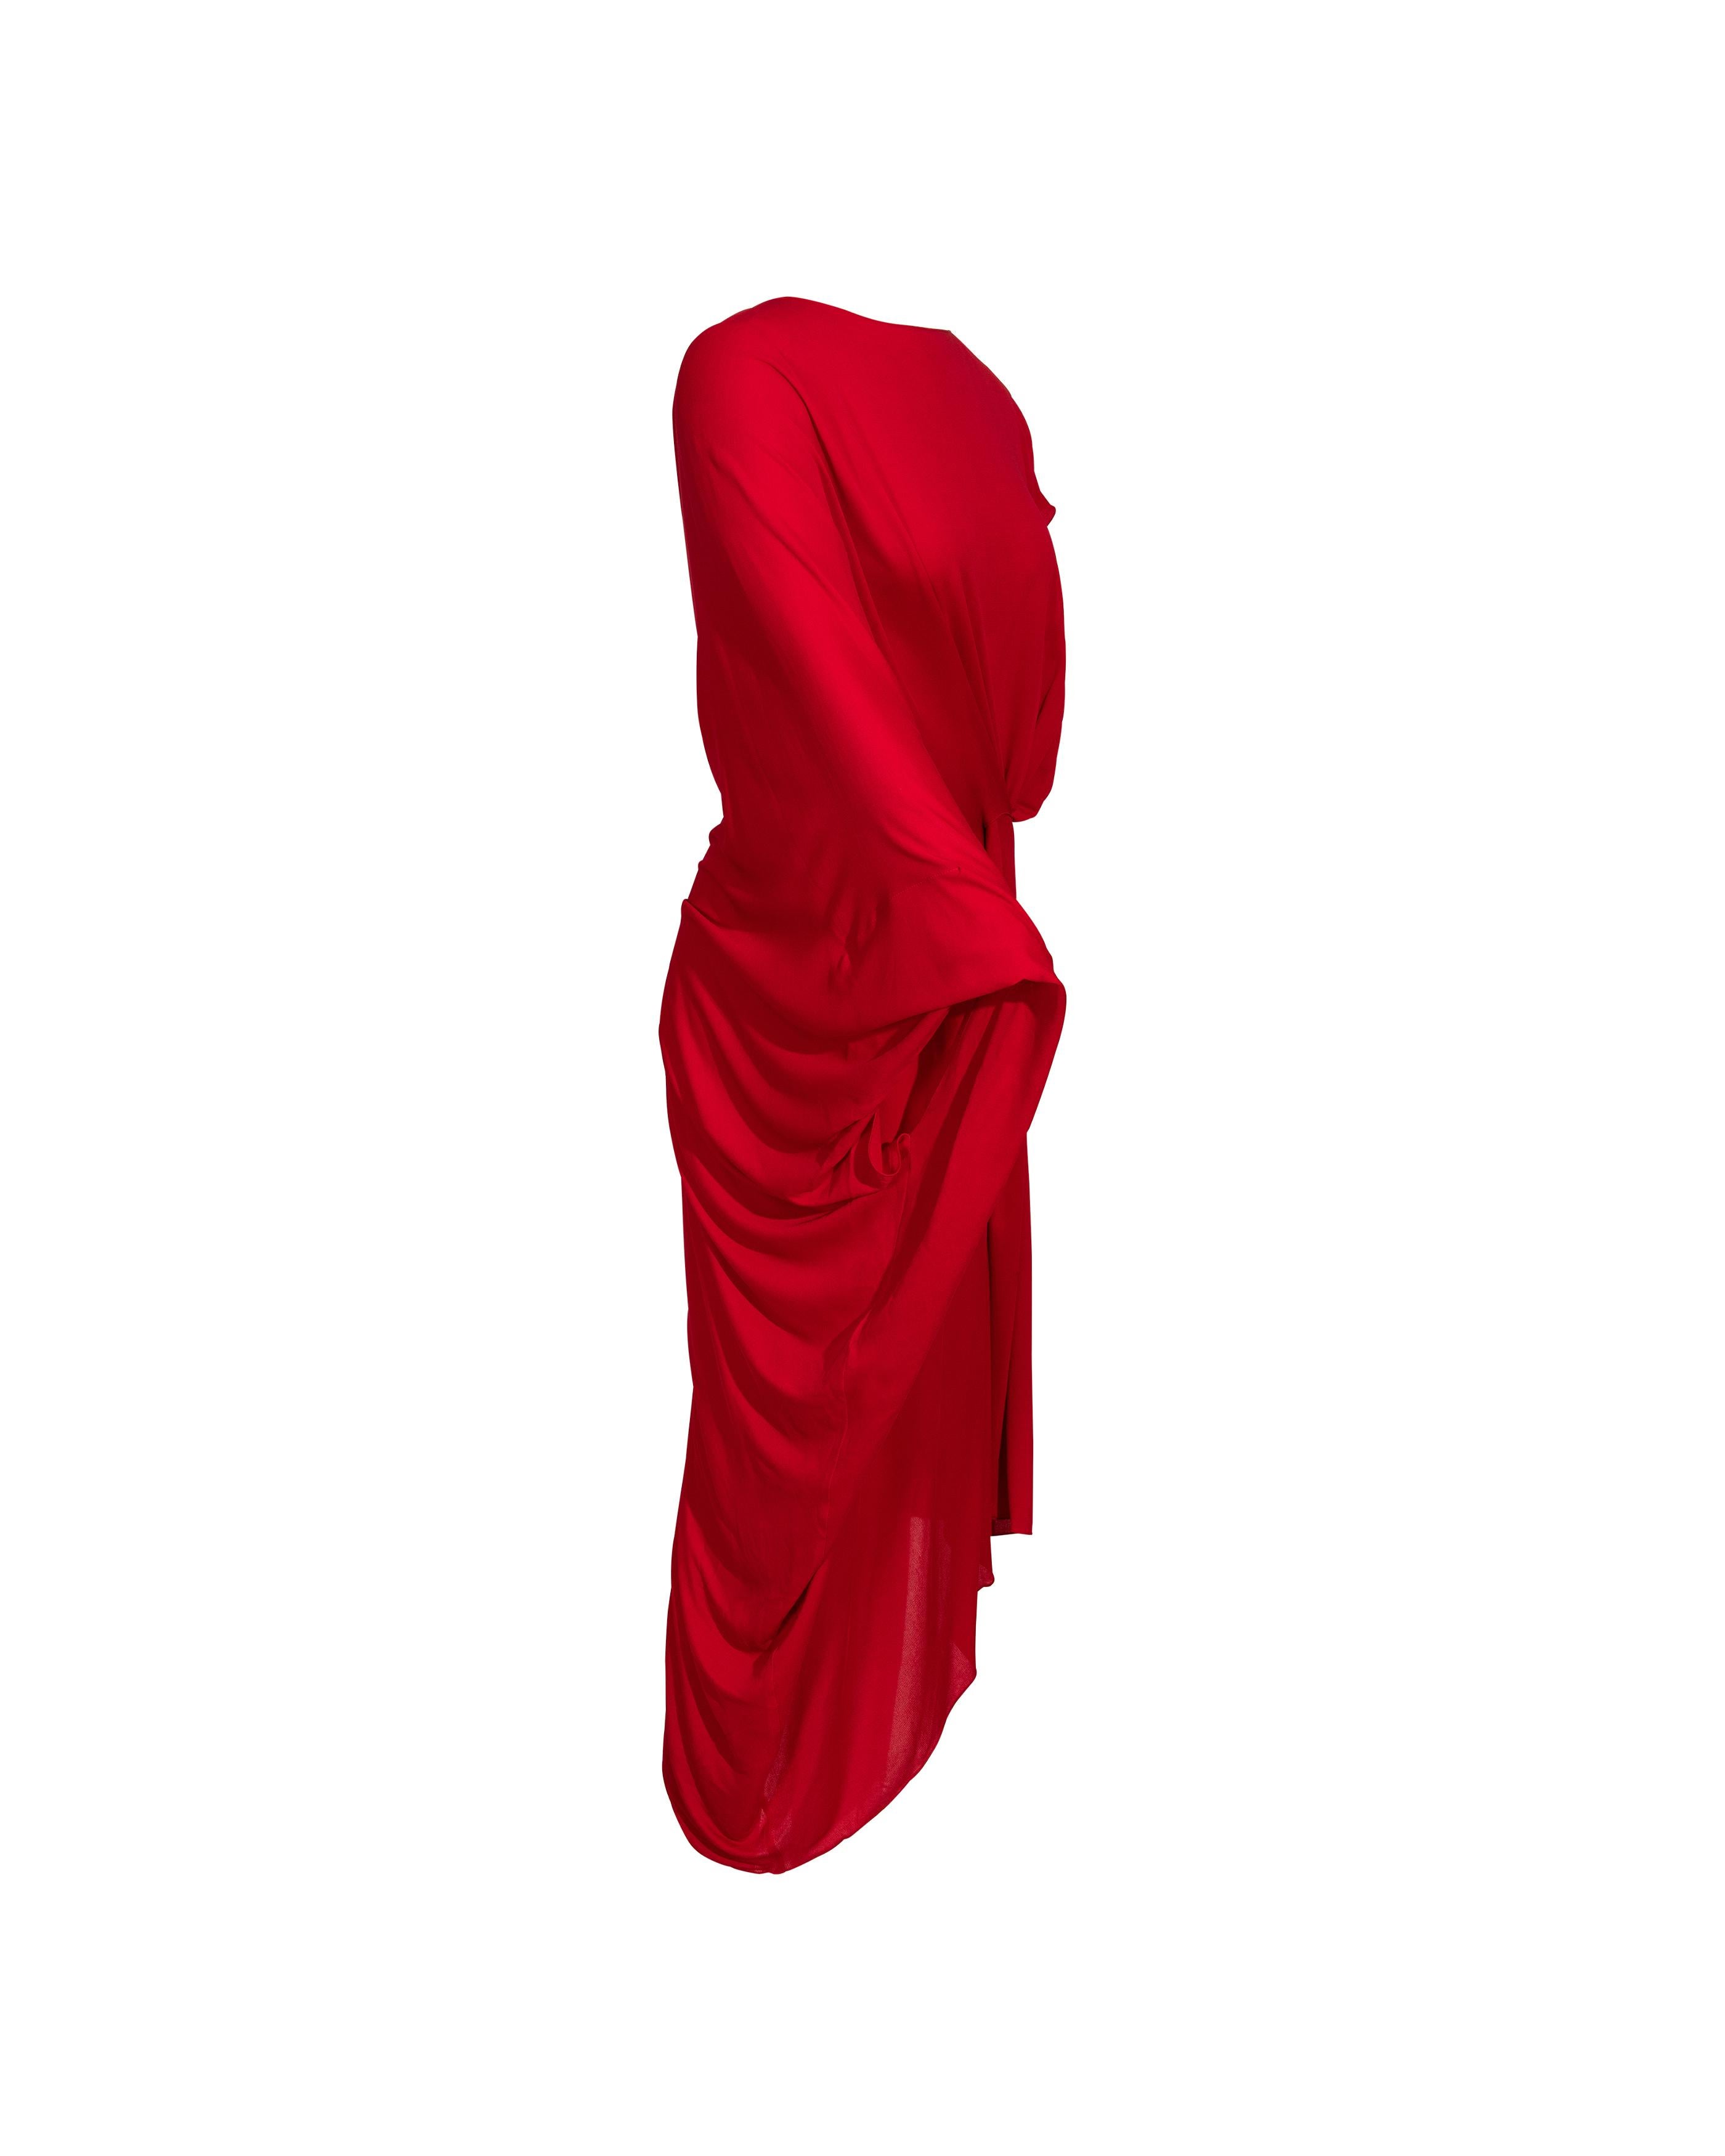 S/S 2009 Maison Martin Margiela Red Jersey Asymmetrical Drape Dress For Sale 3